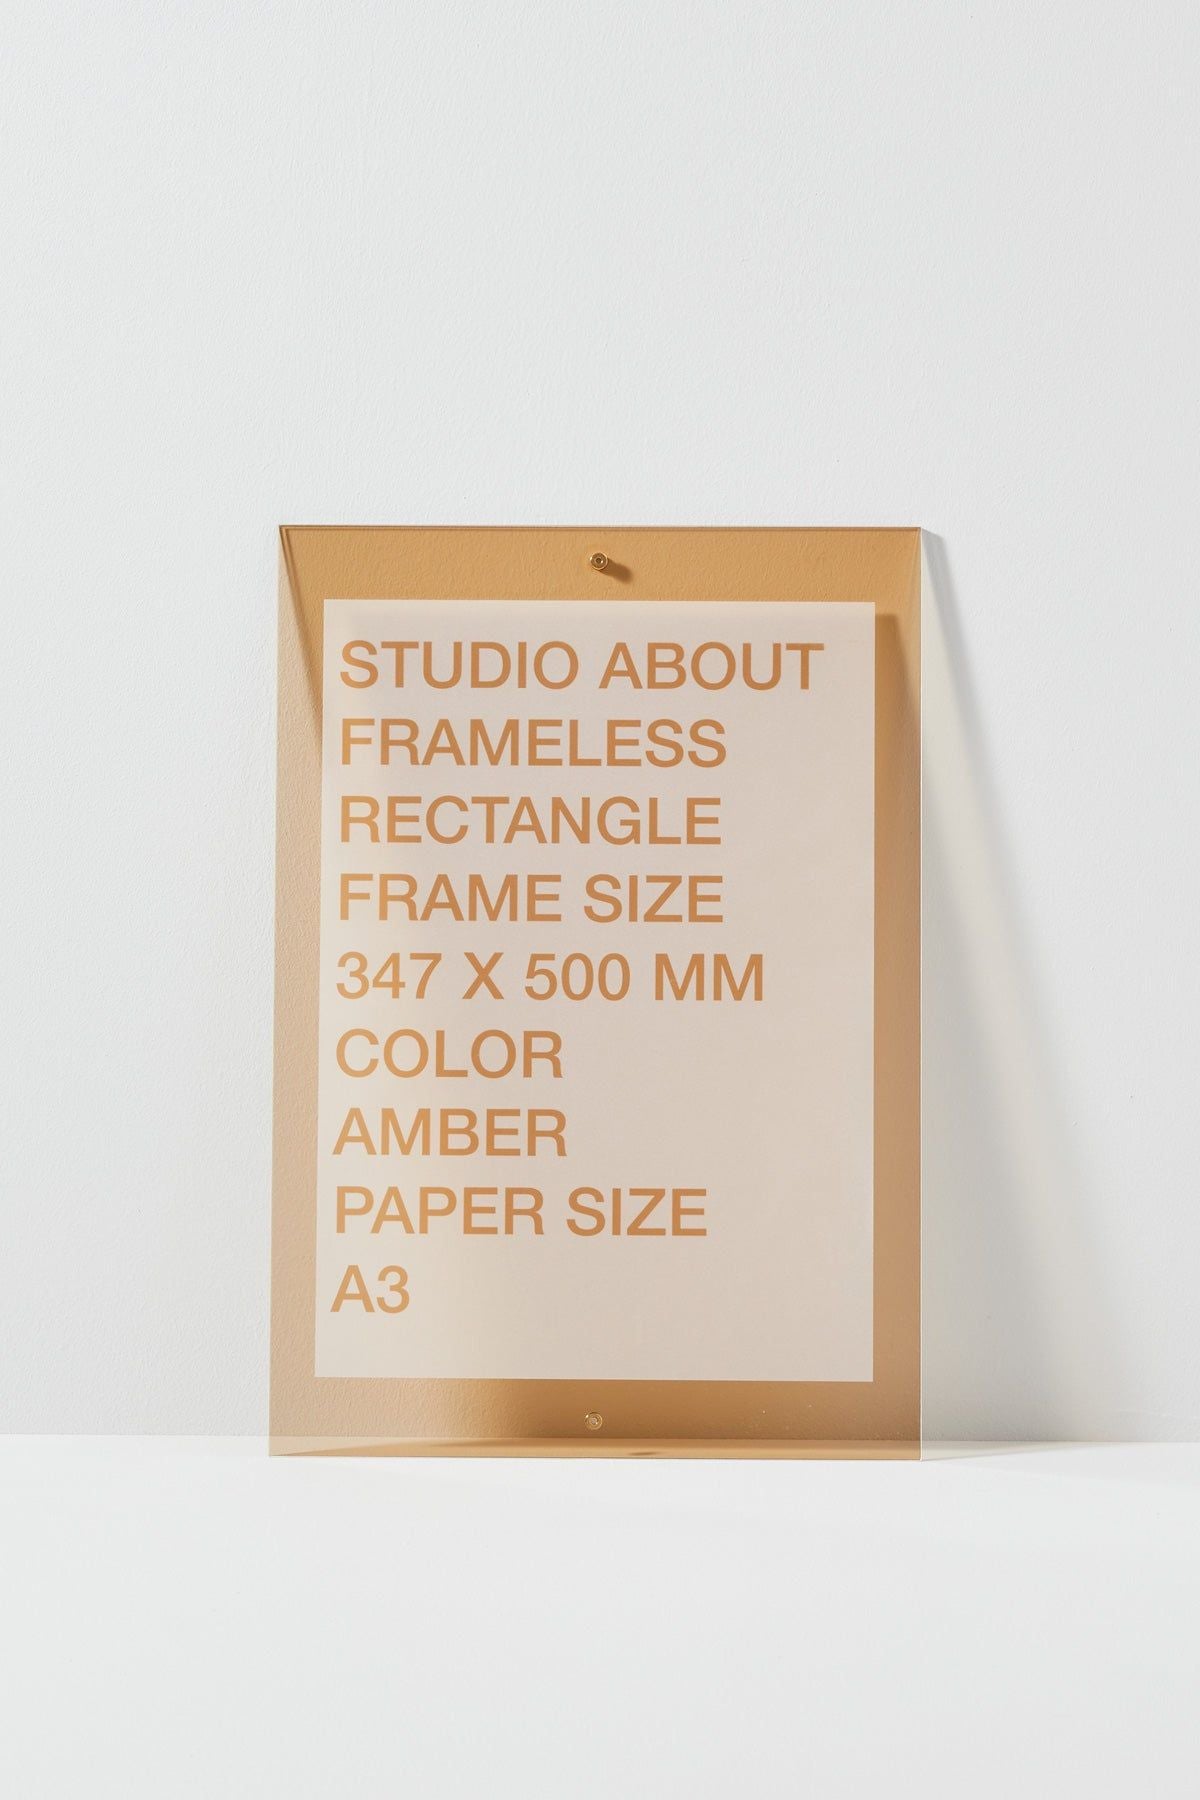 Studio over frameloze frame A3 -rechthoek, Amber